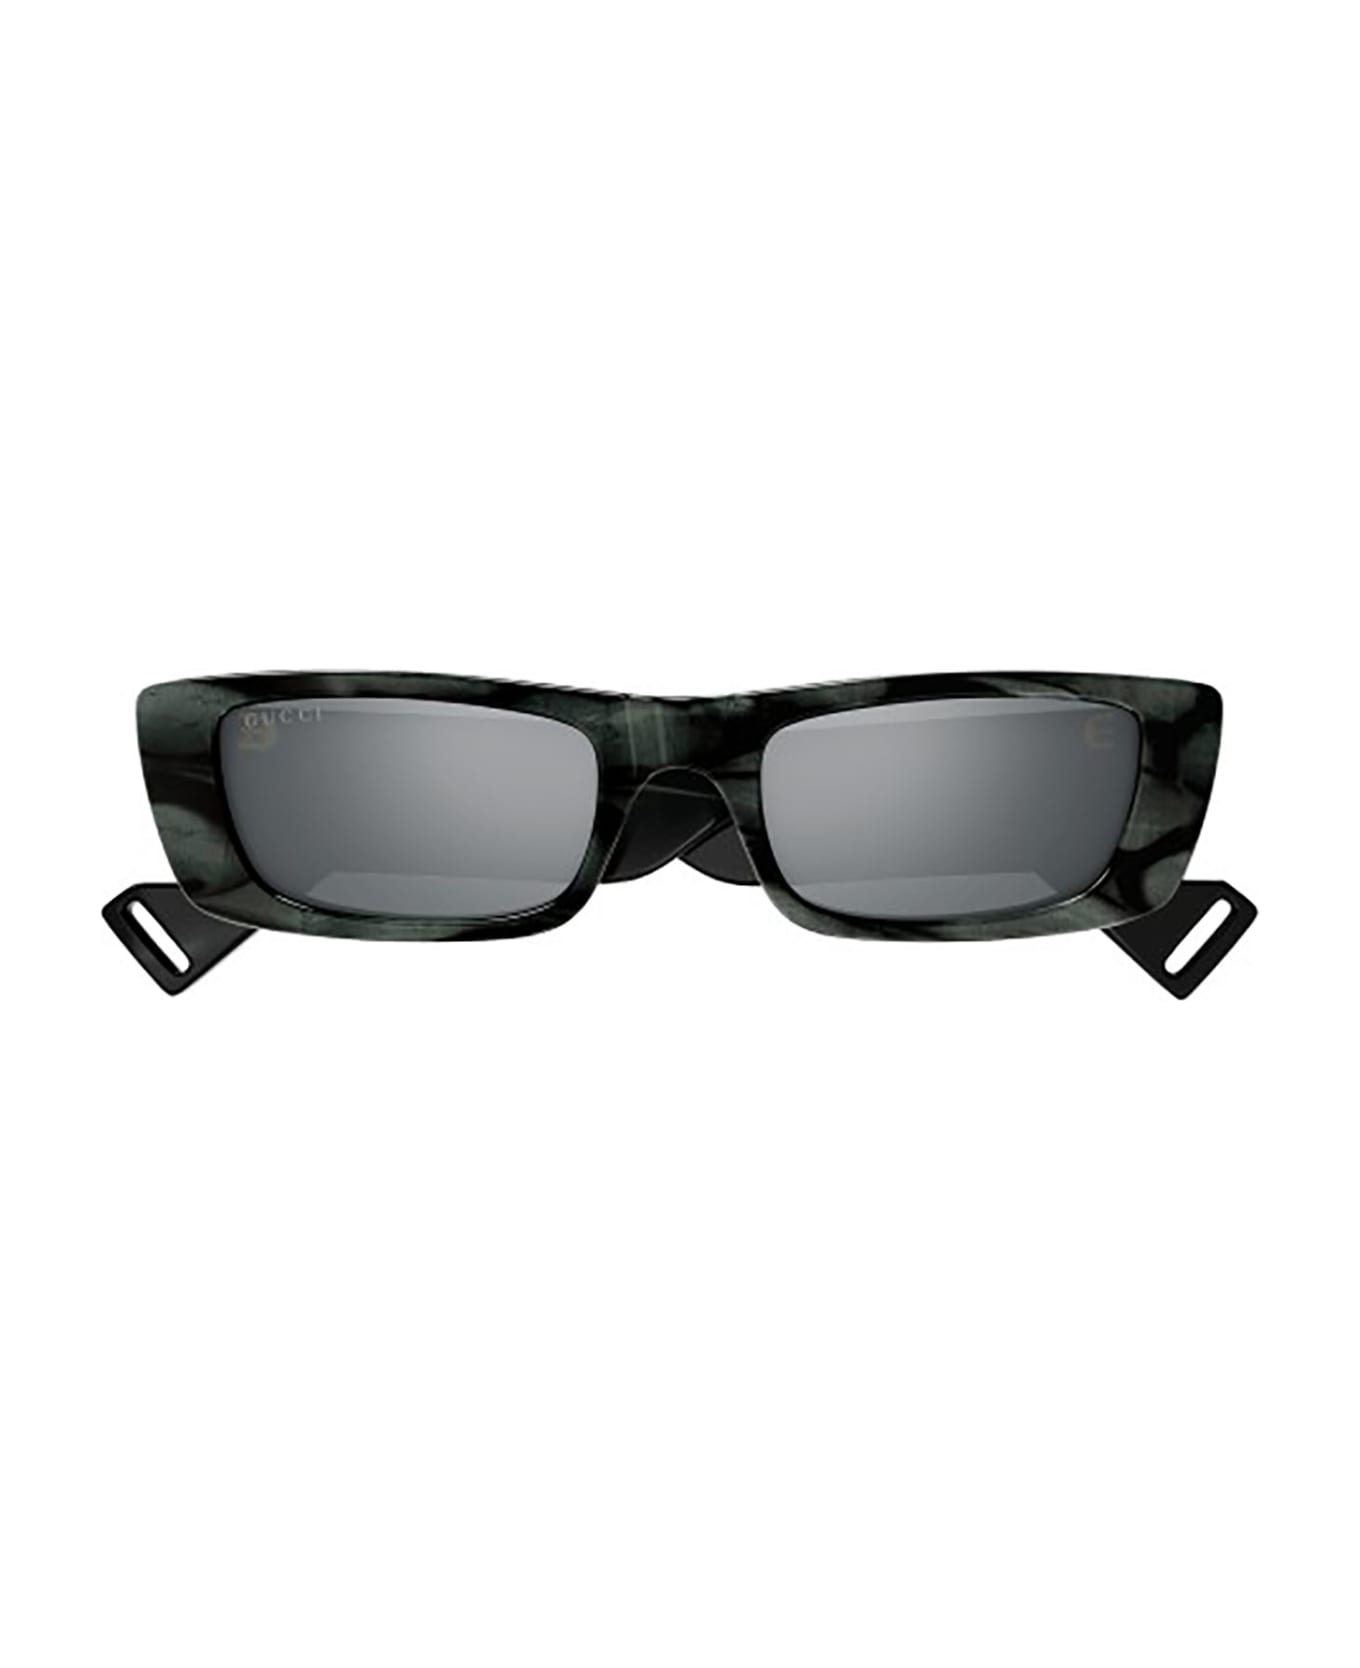 Gucci Eyewear Gg0516s Sunglasses - 013 grey grey silver サングラス